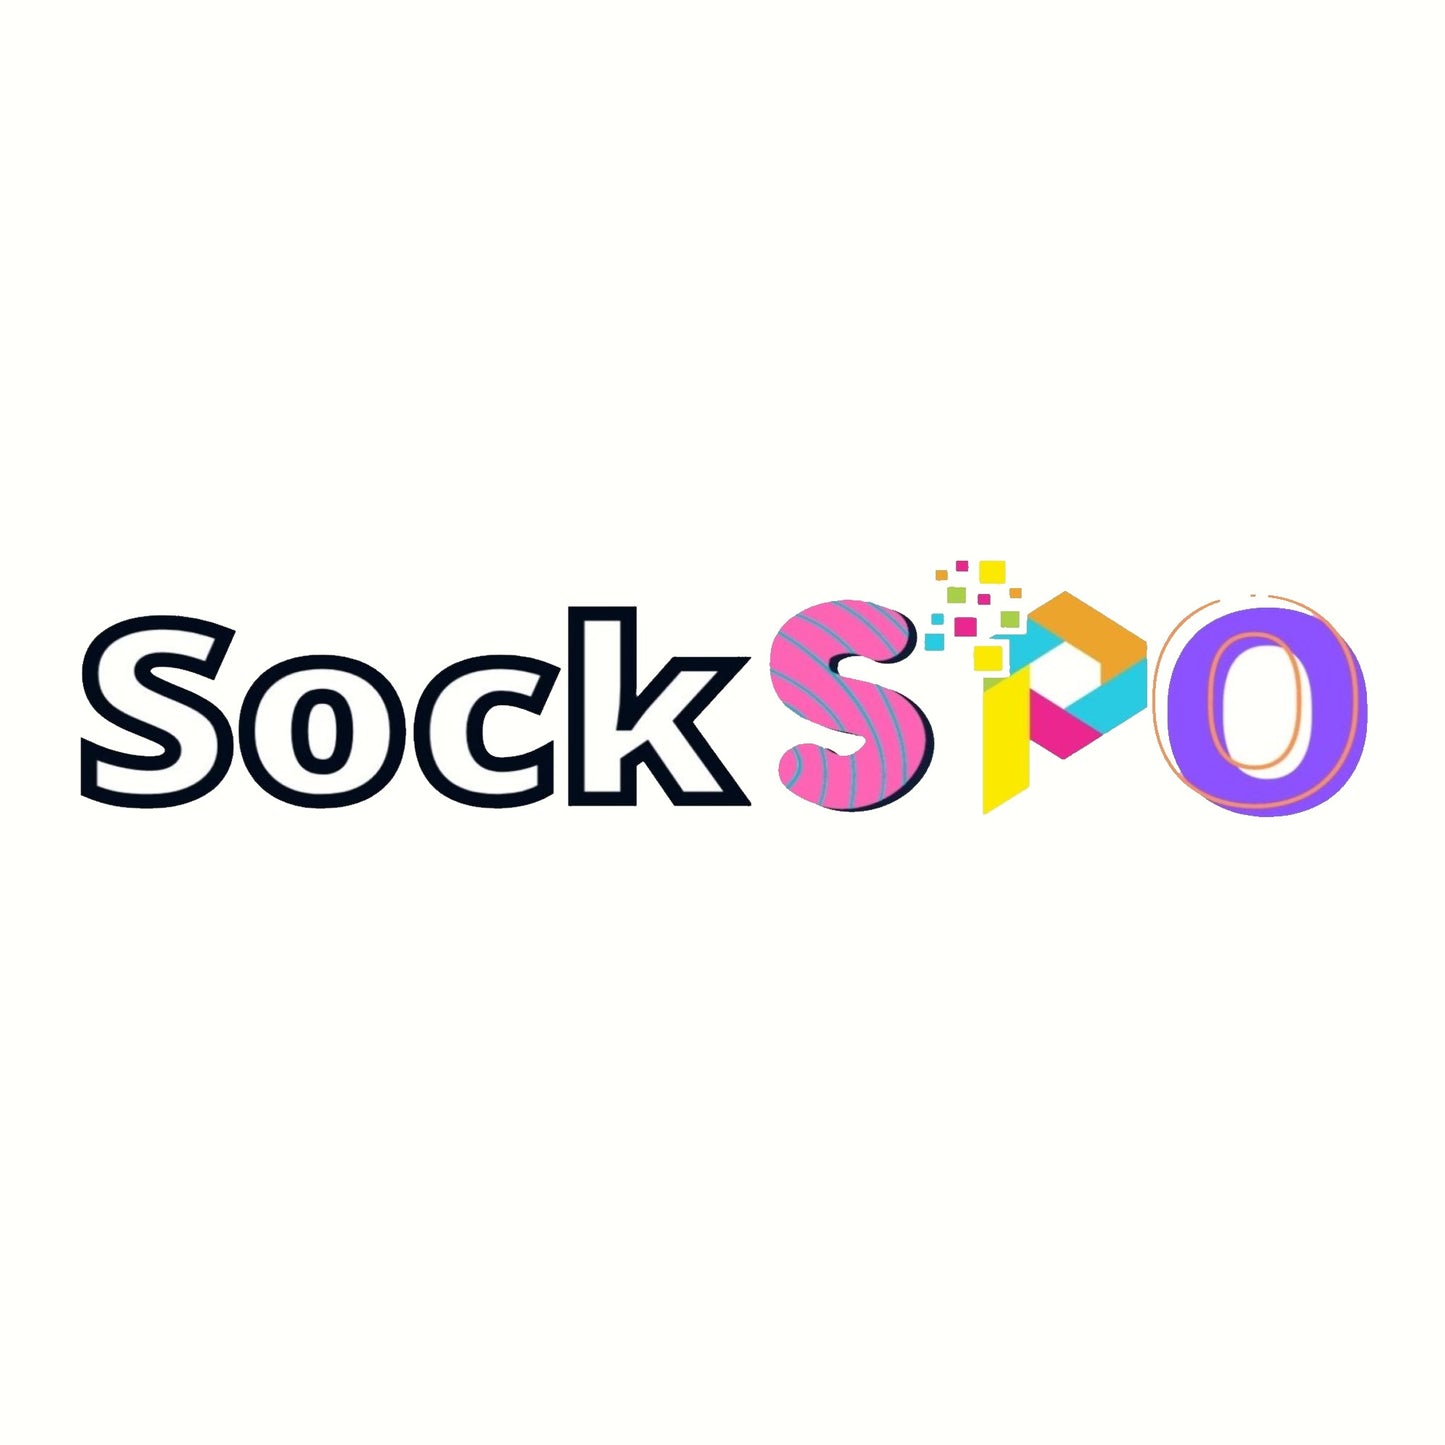 SockSpo Gift Card